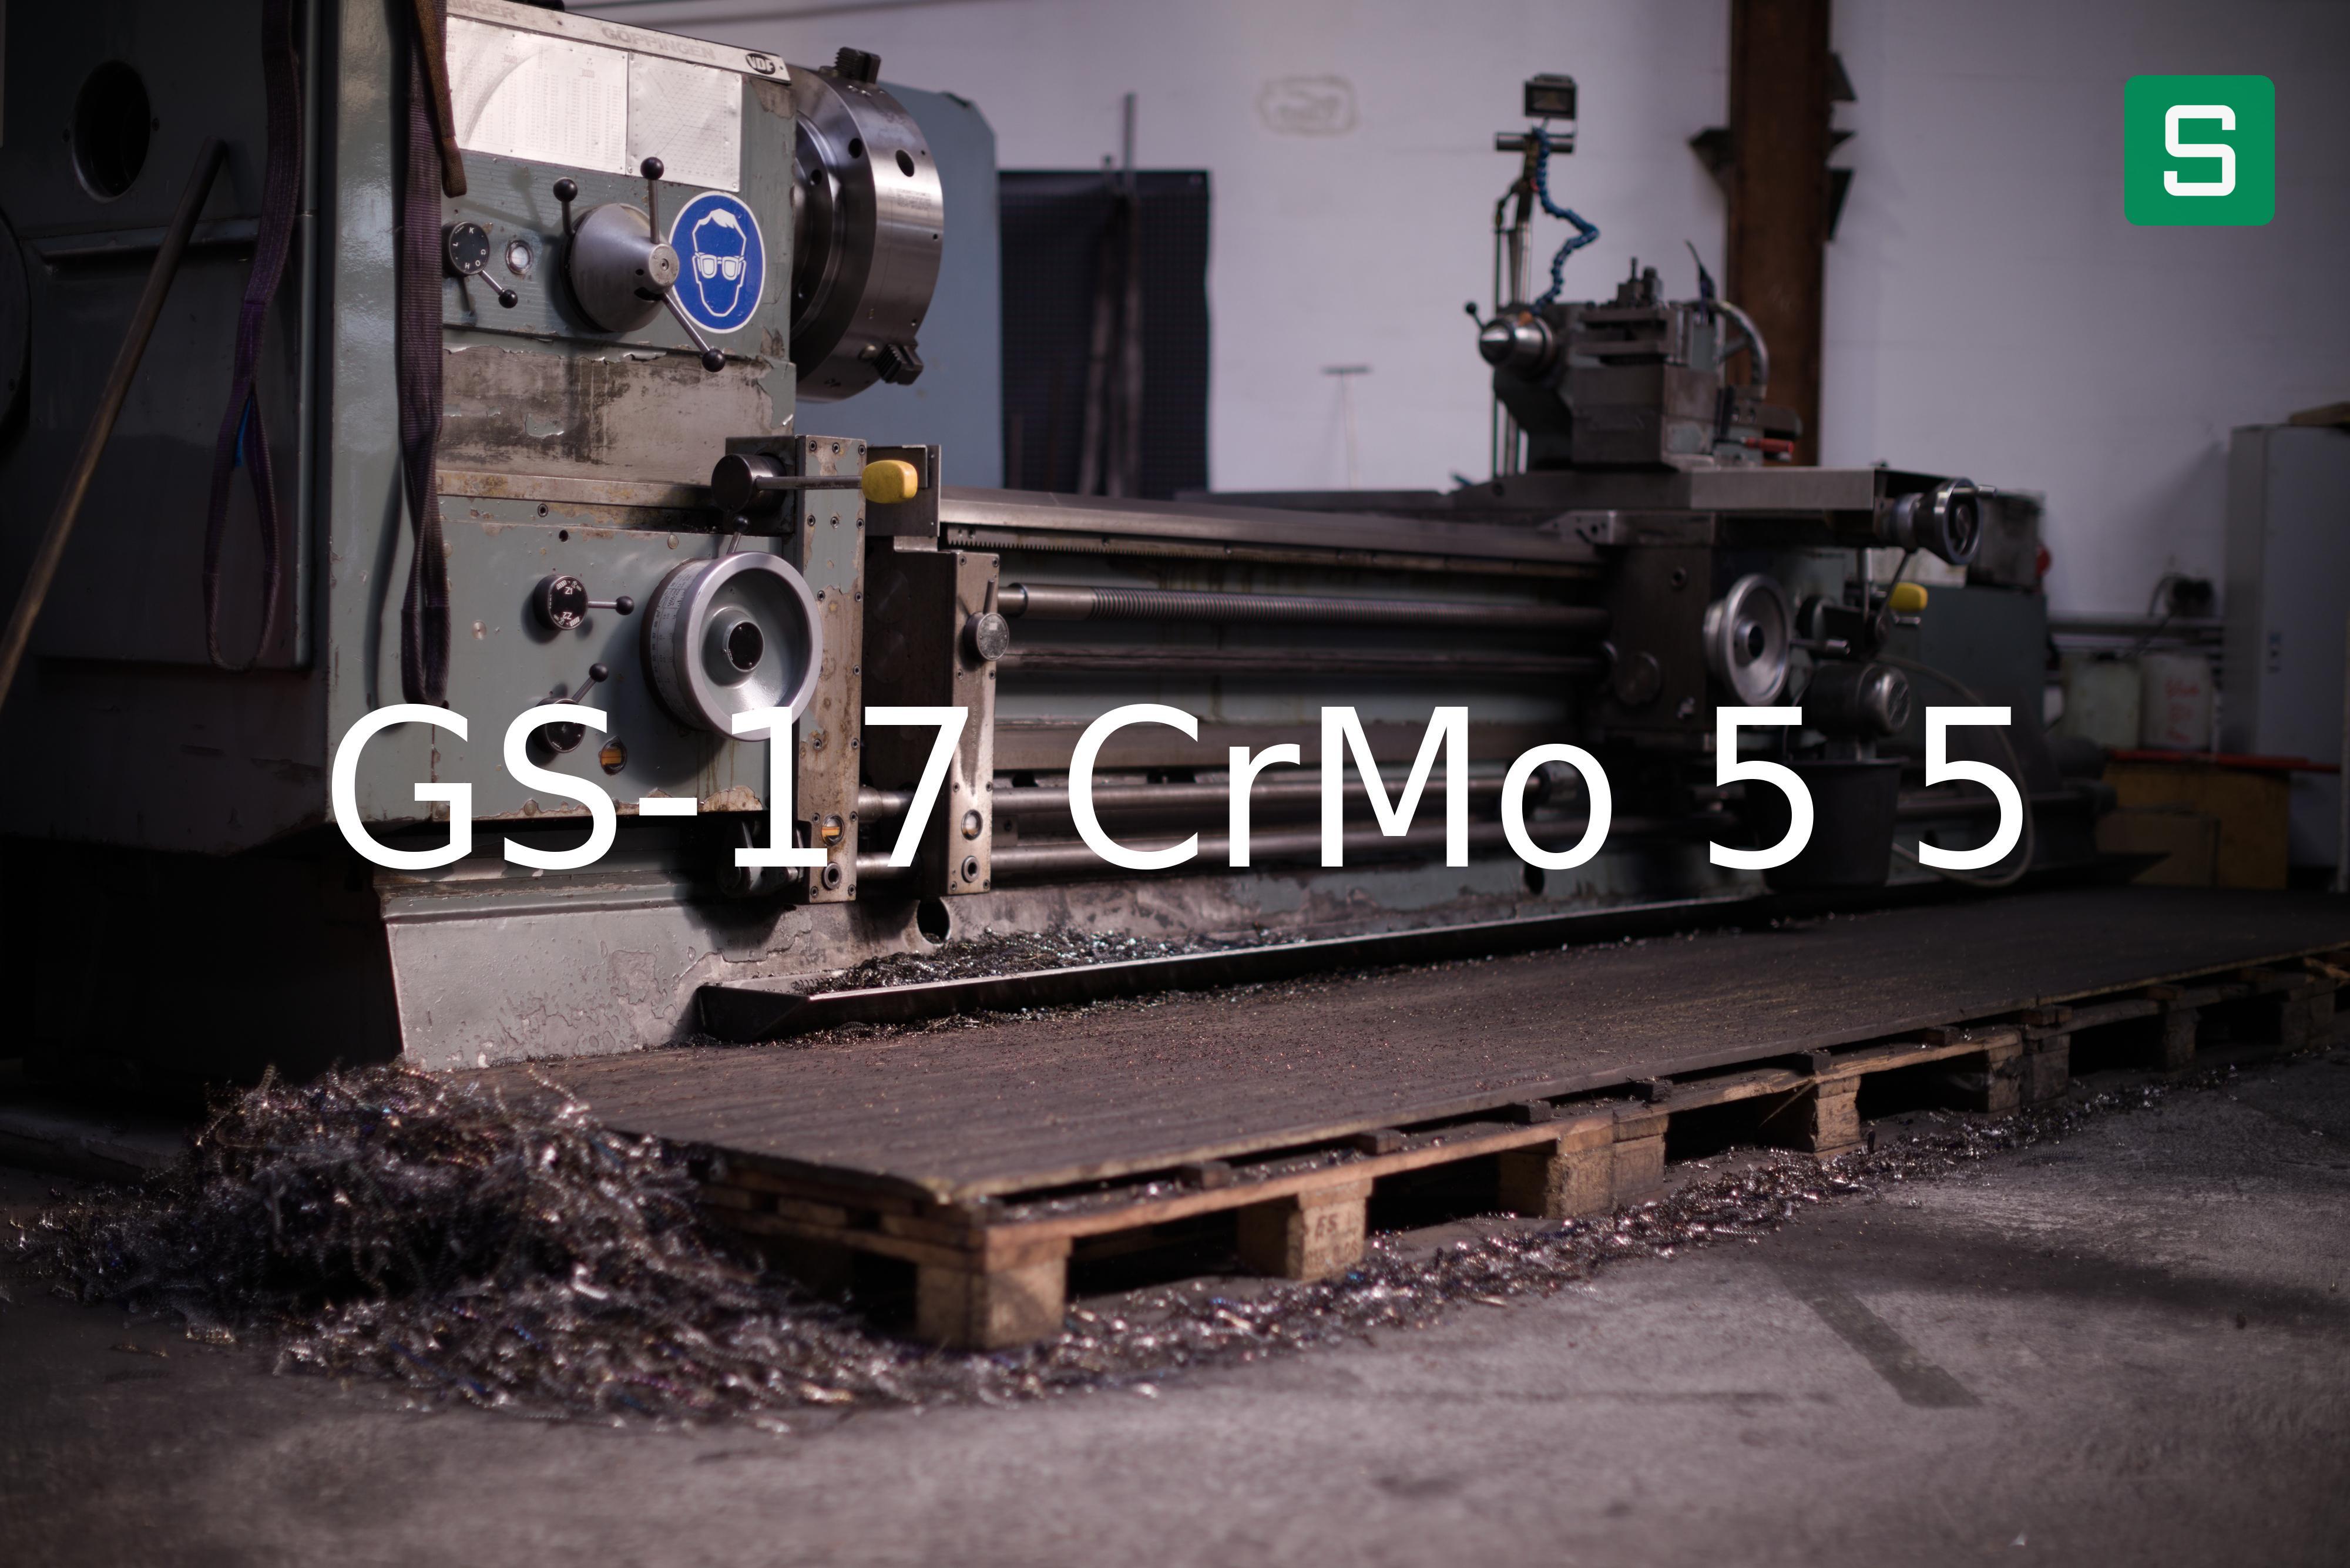 Steel Material: GS-17 CrMo 5 5